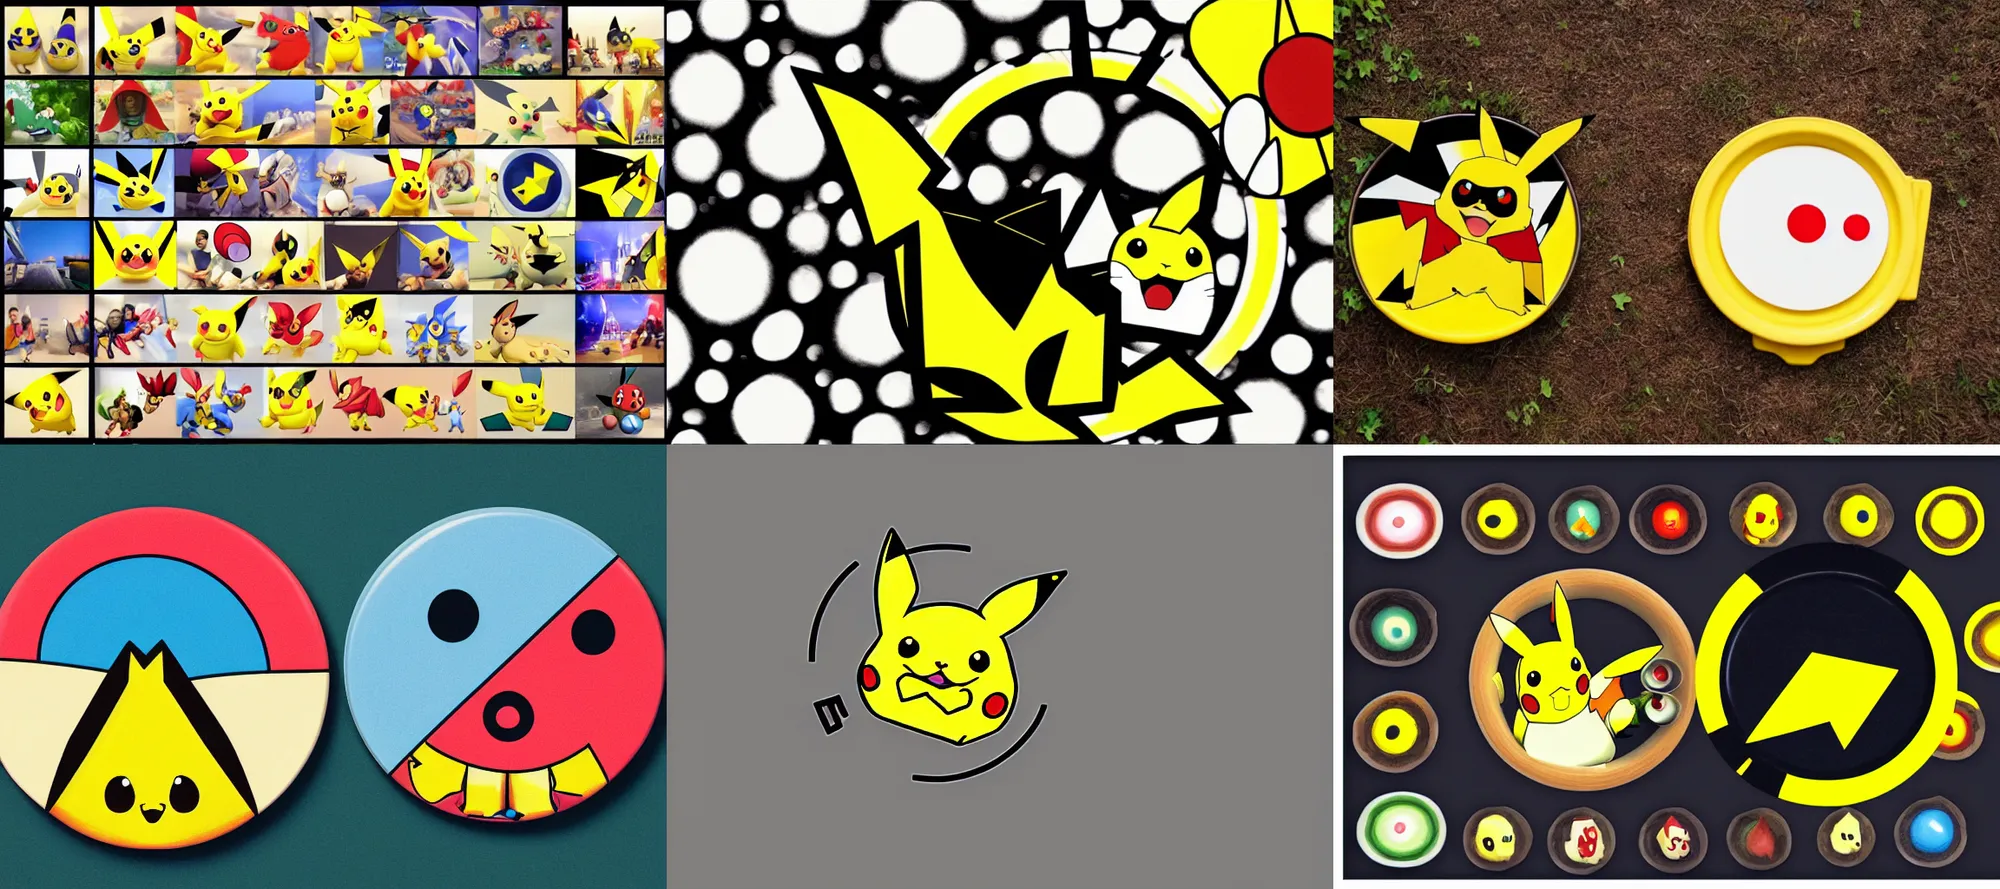 Prompt: photography pie chart pikachu pokemon snap - 5 7 1 3 8 5 1 1 3 6